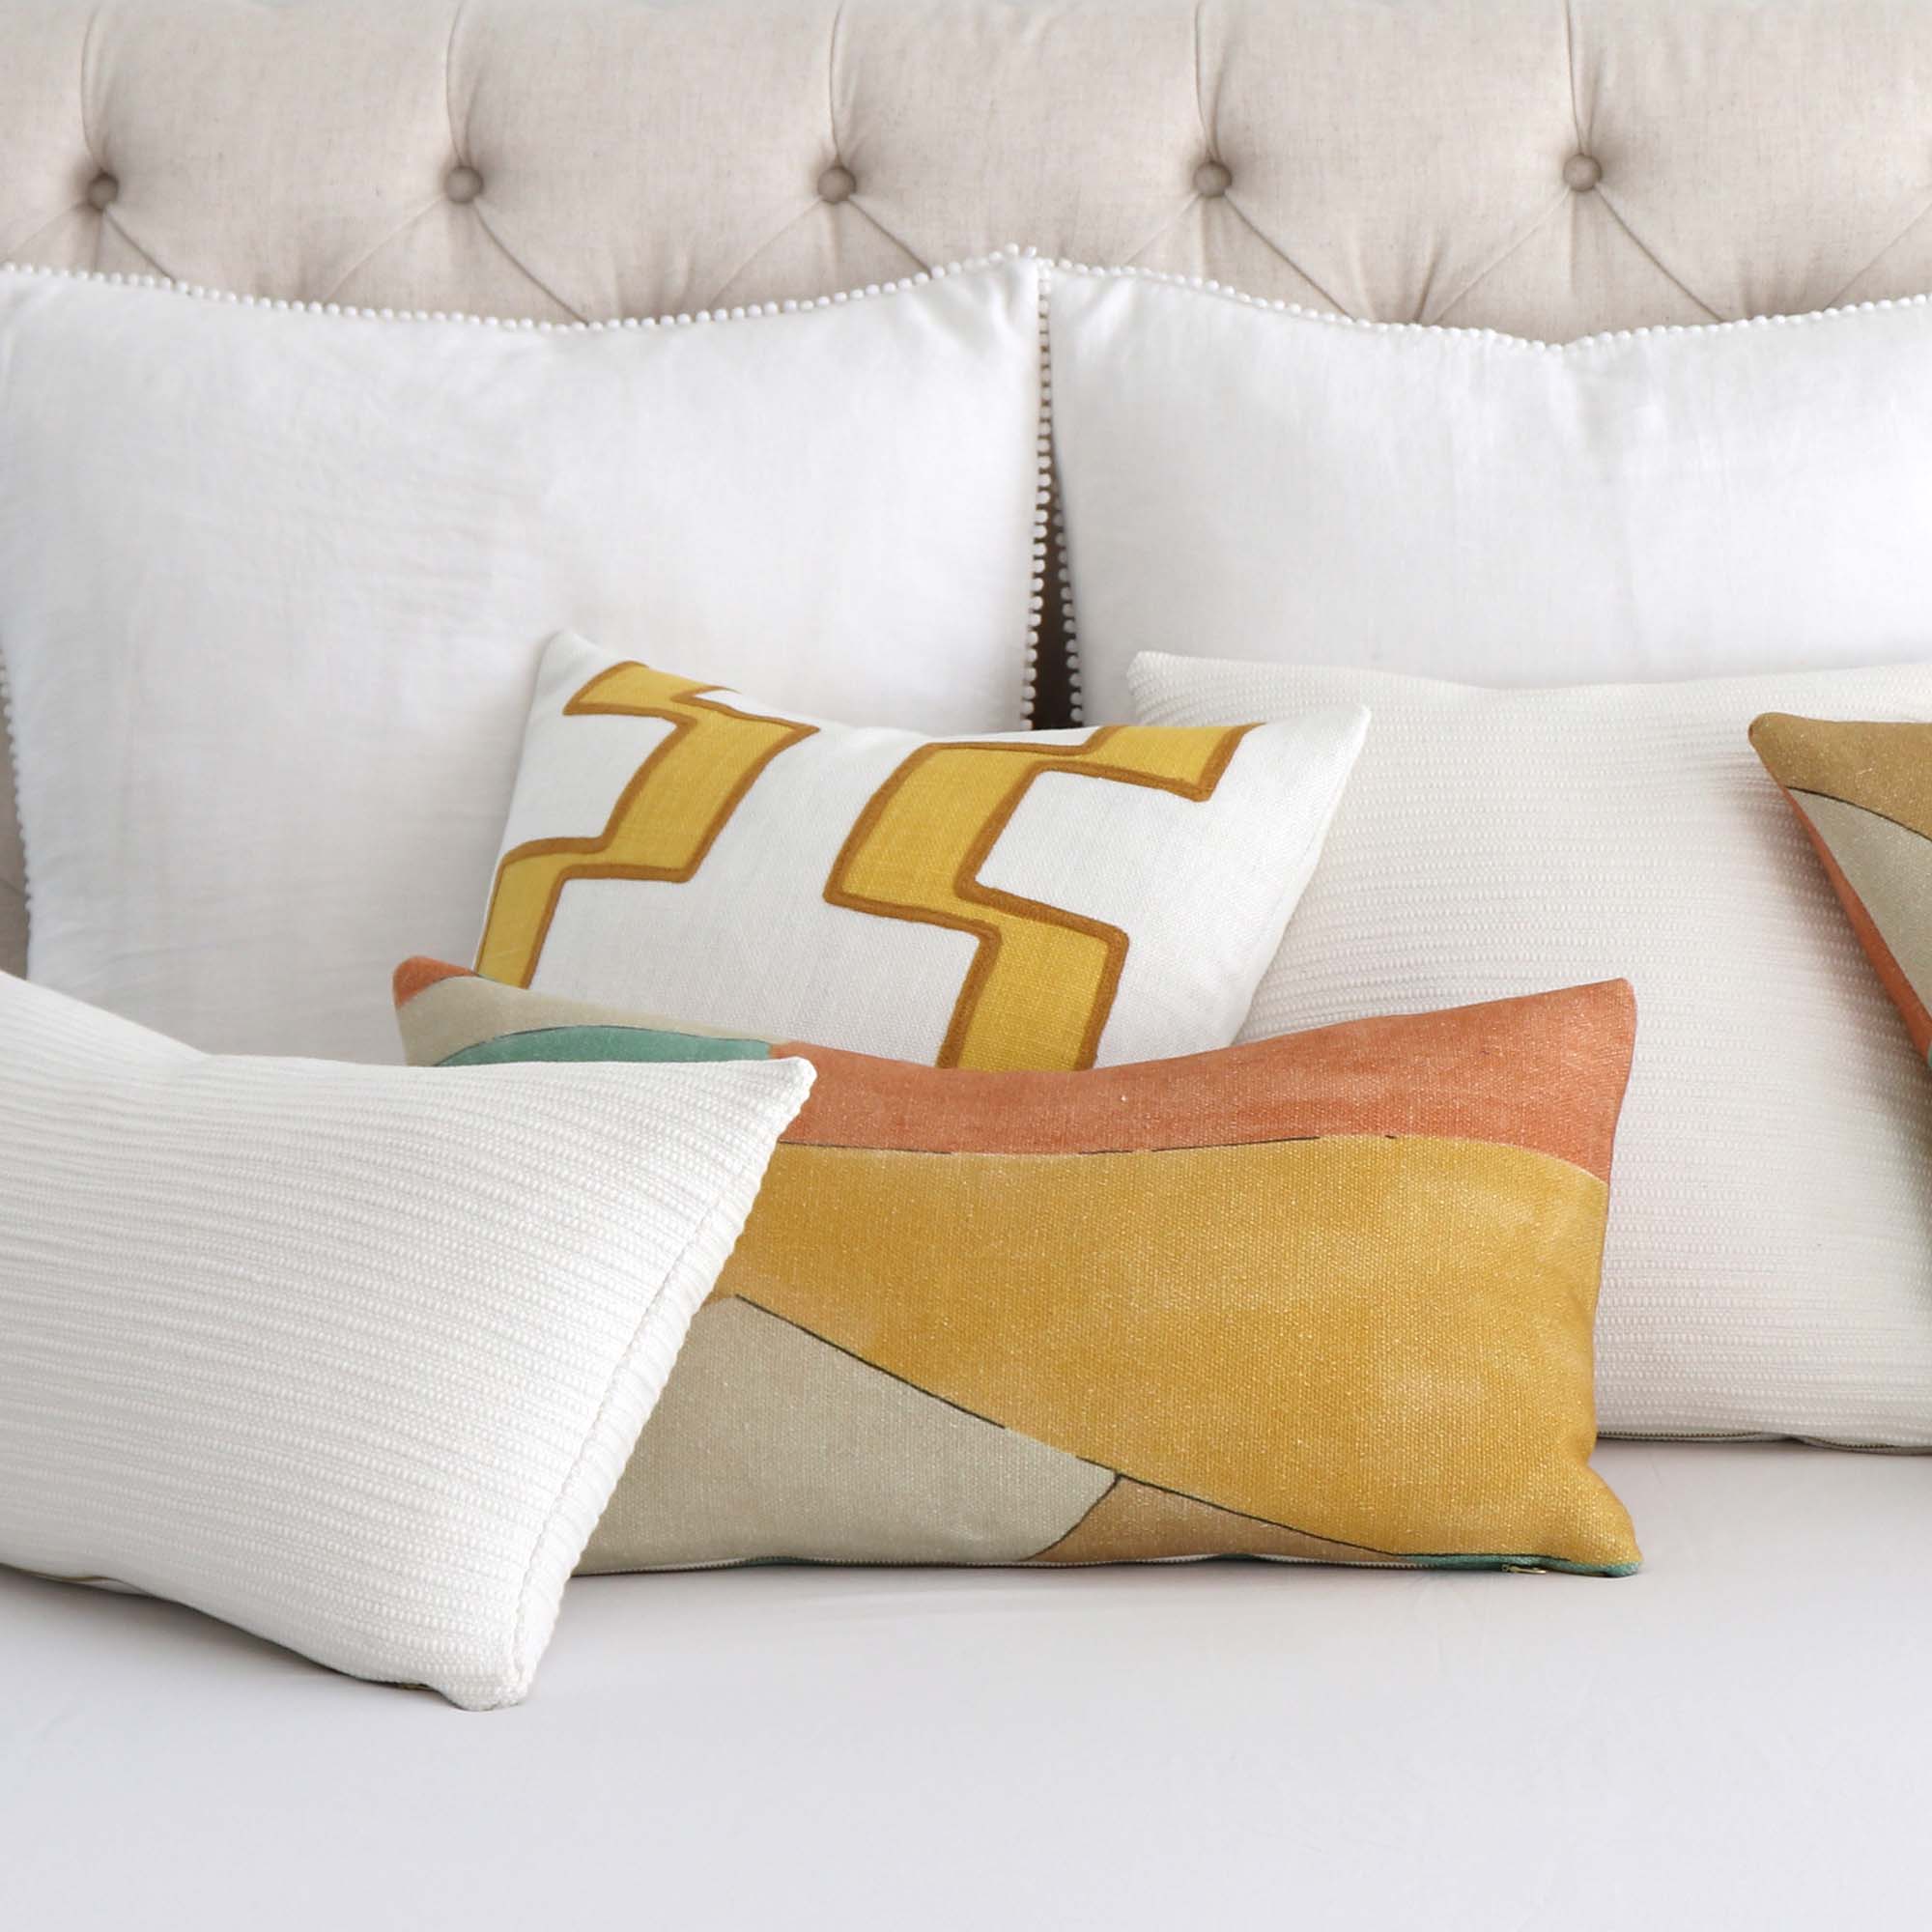 Zak + Fox Jibari Textured White Luxury Designer Throw Pillow Cover with Matching Pillows